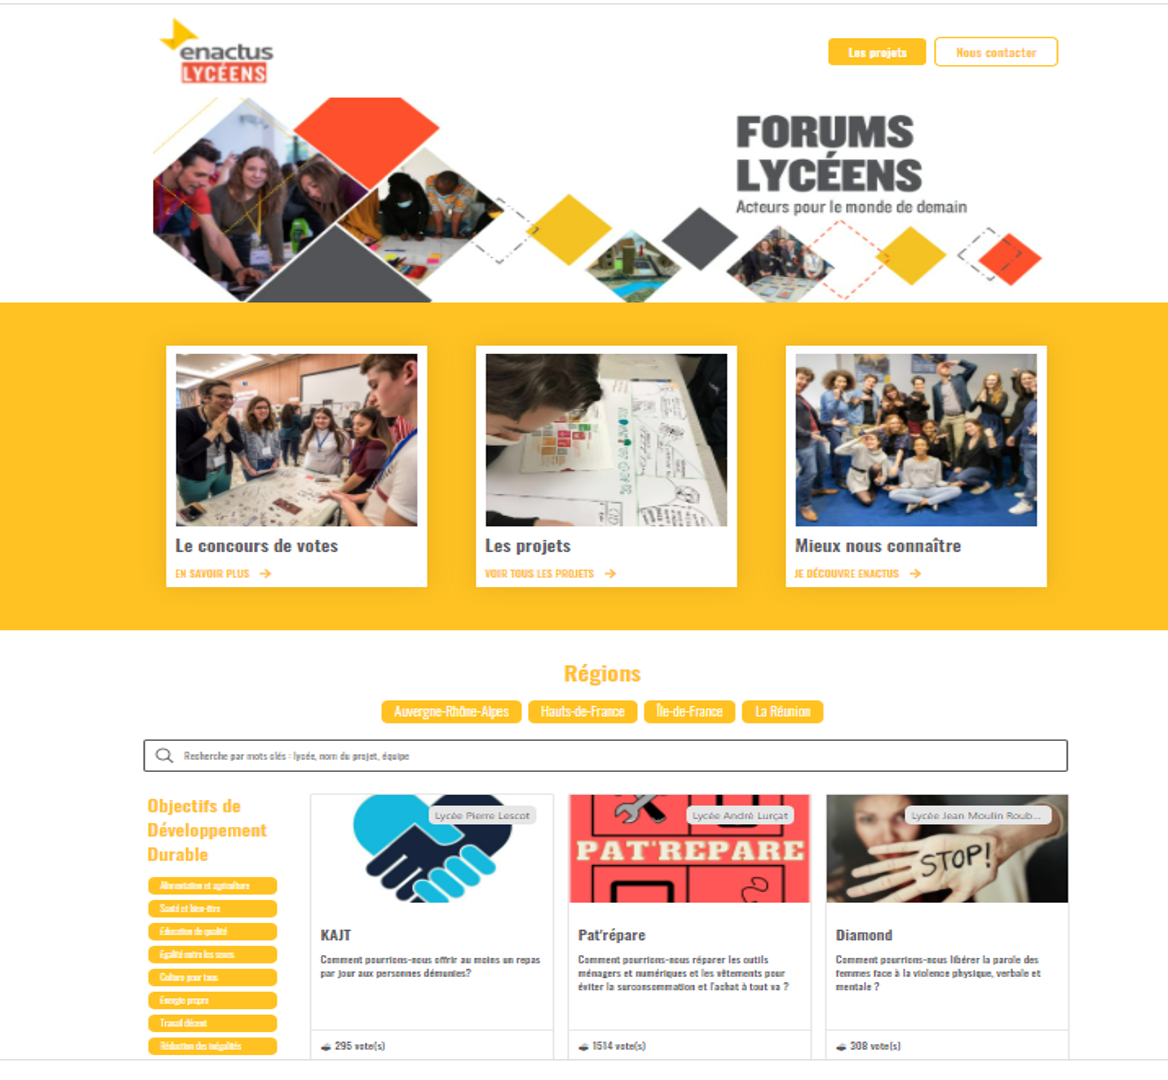 Enactus Forums Lycéens